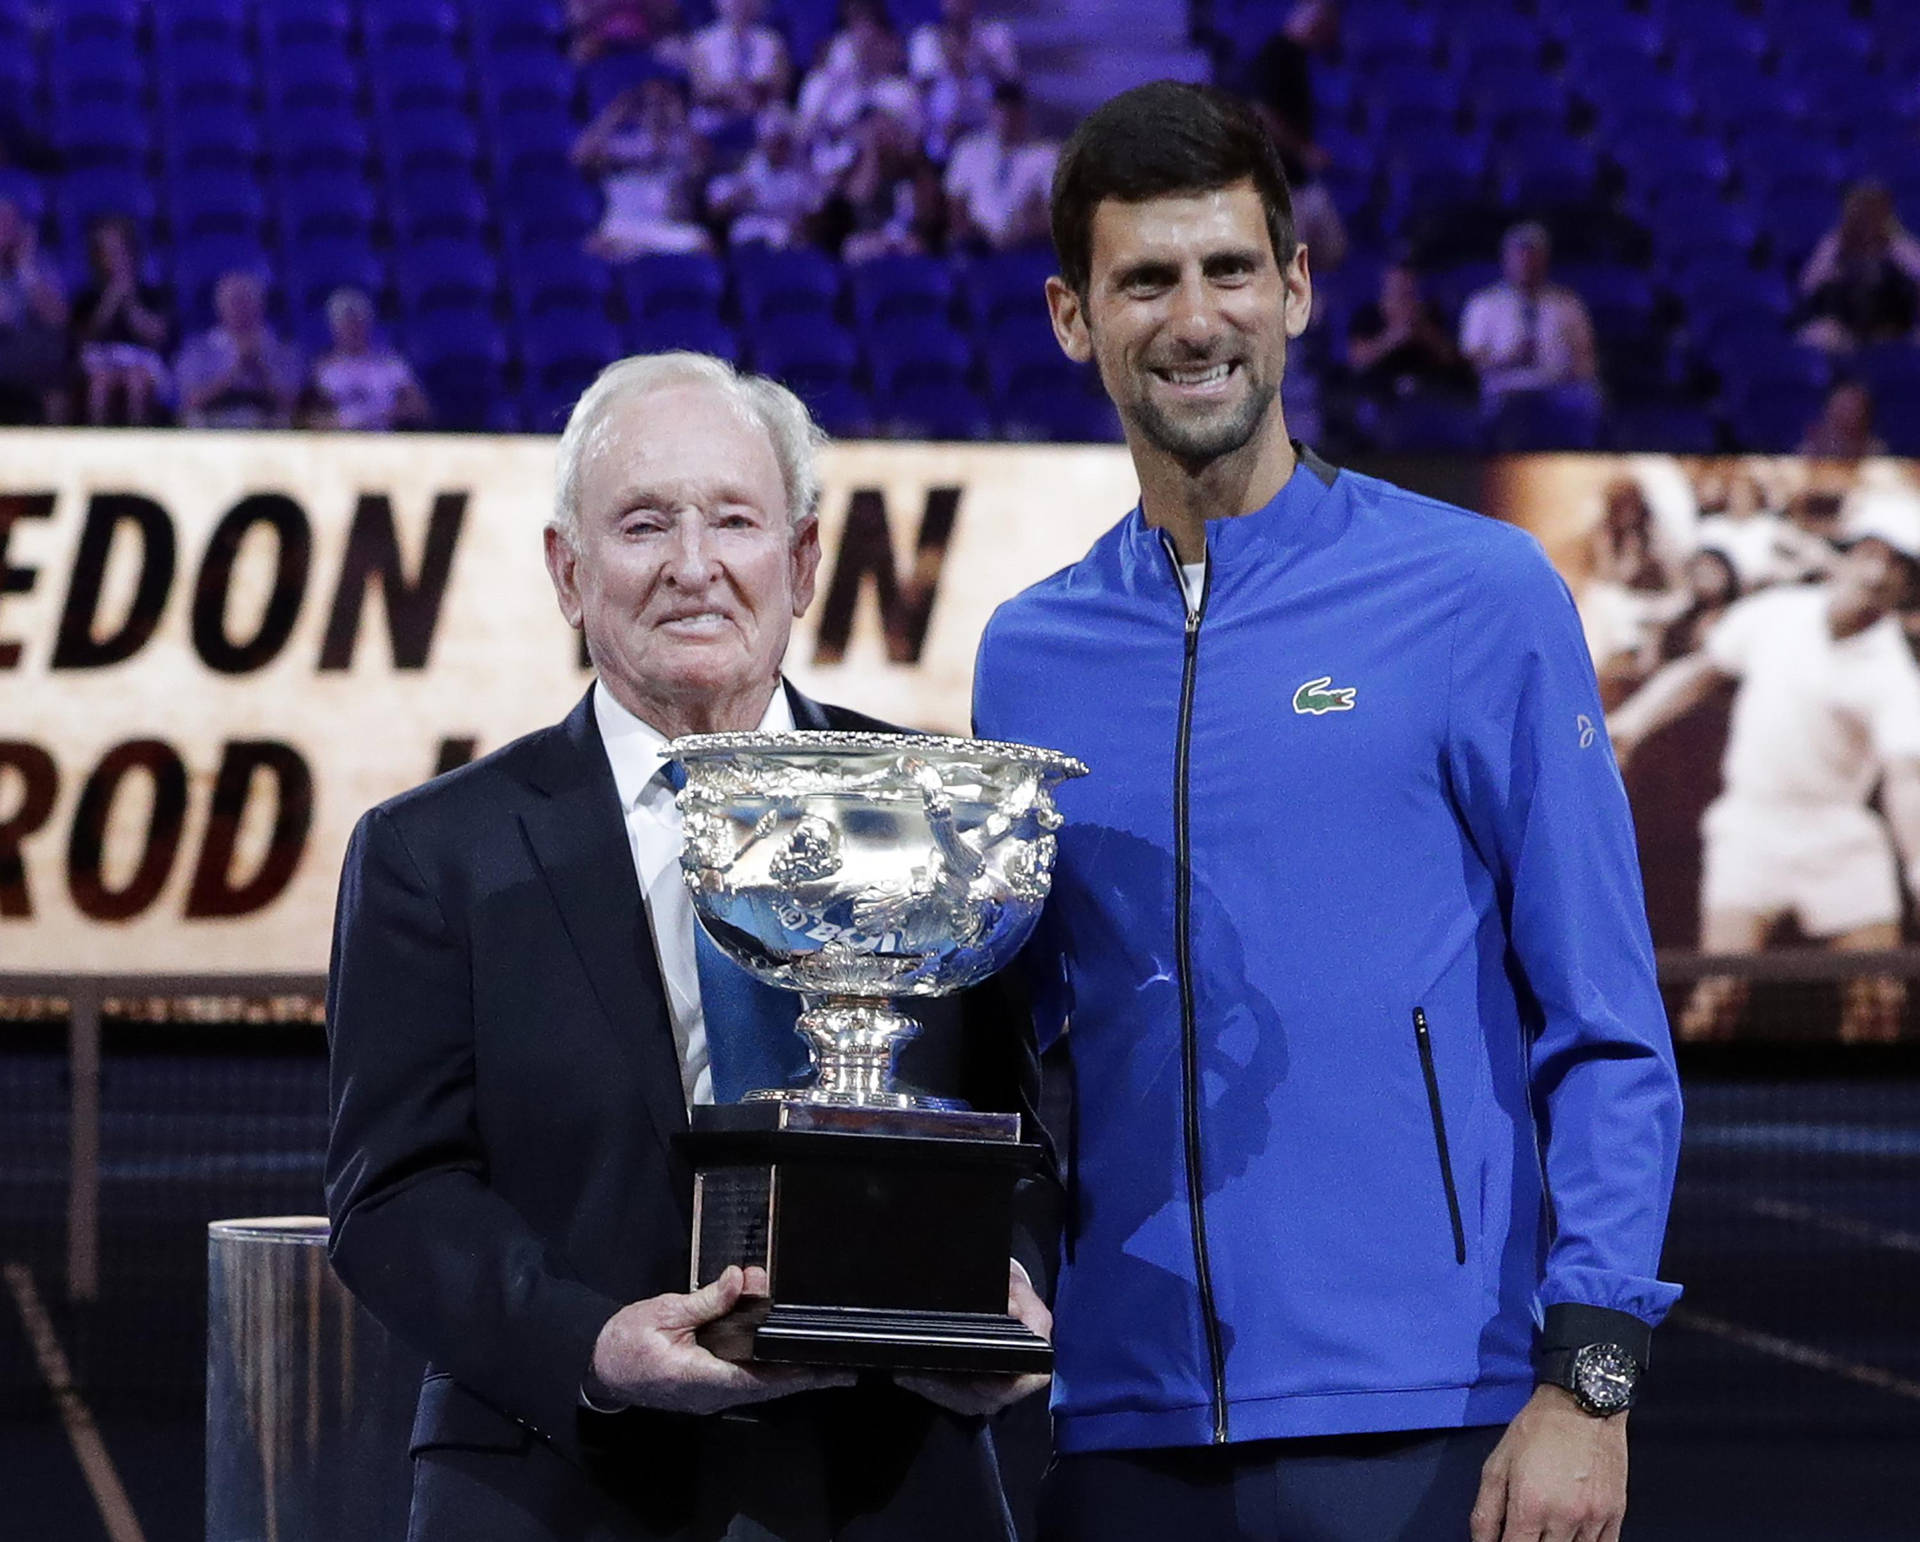 Rod Laver Holding Trophy With Novak Djokovic Background